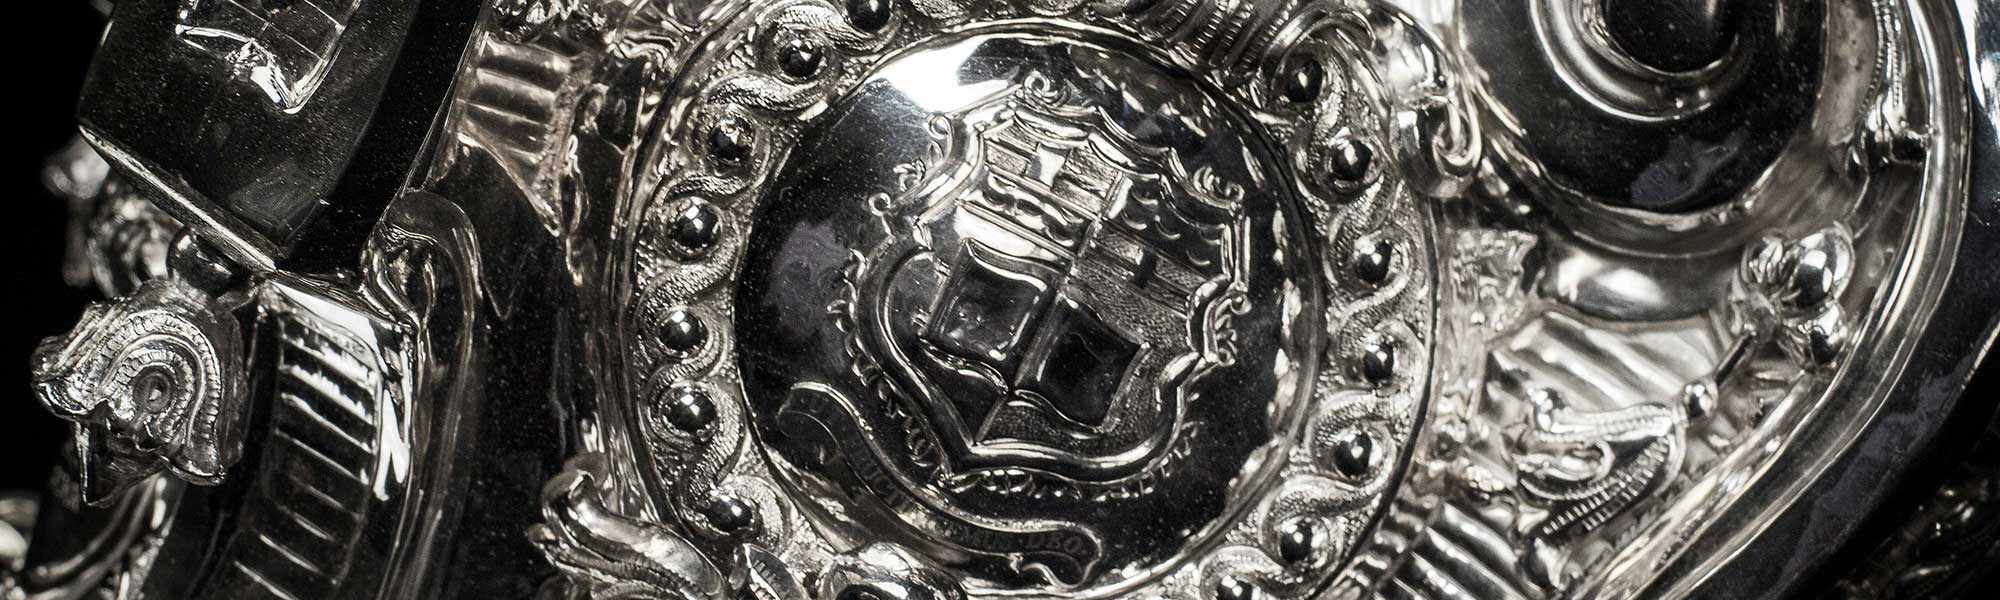 Detail of University of Malta mace in silver